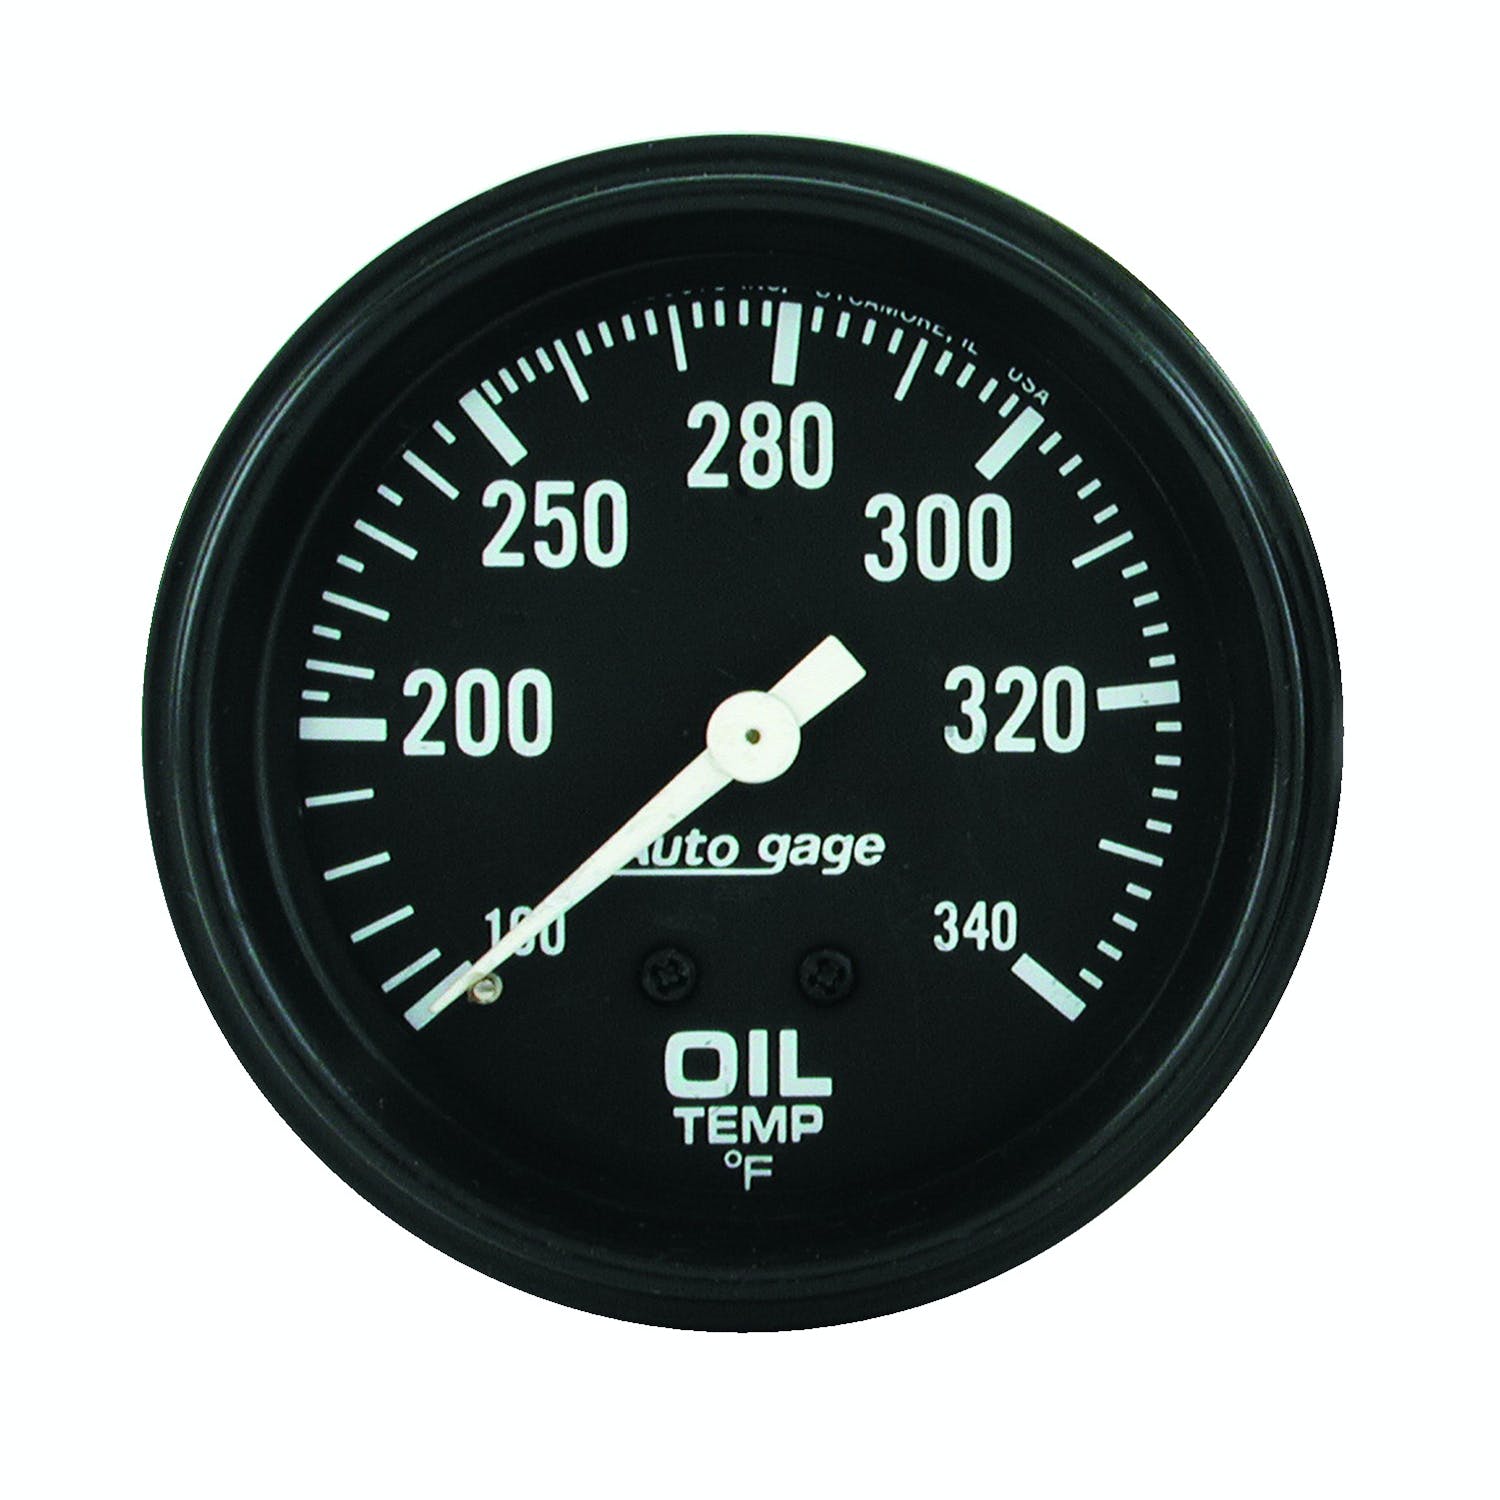 AutoMeter Products 2314 Oil Temp Gauge 100-340 F